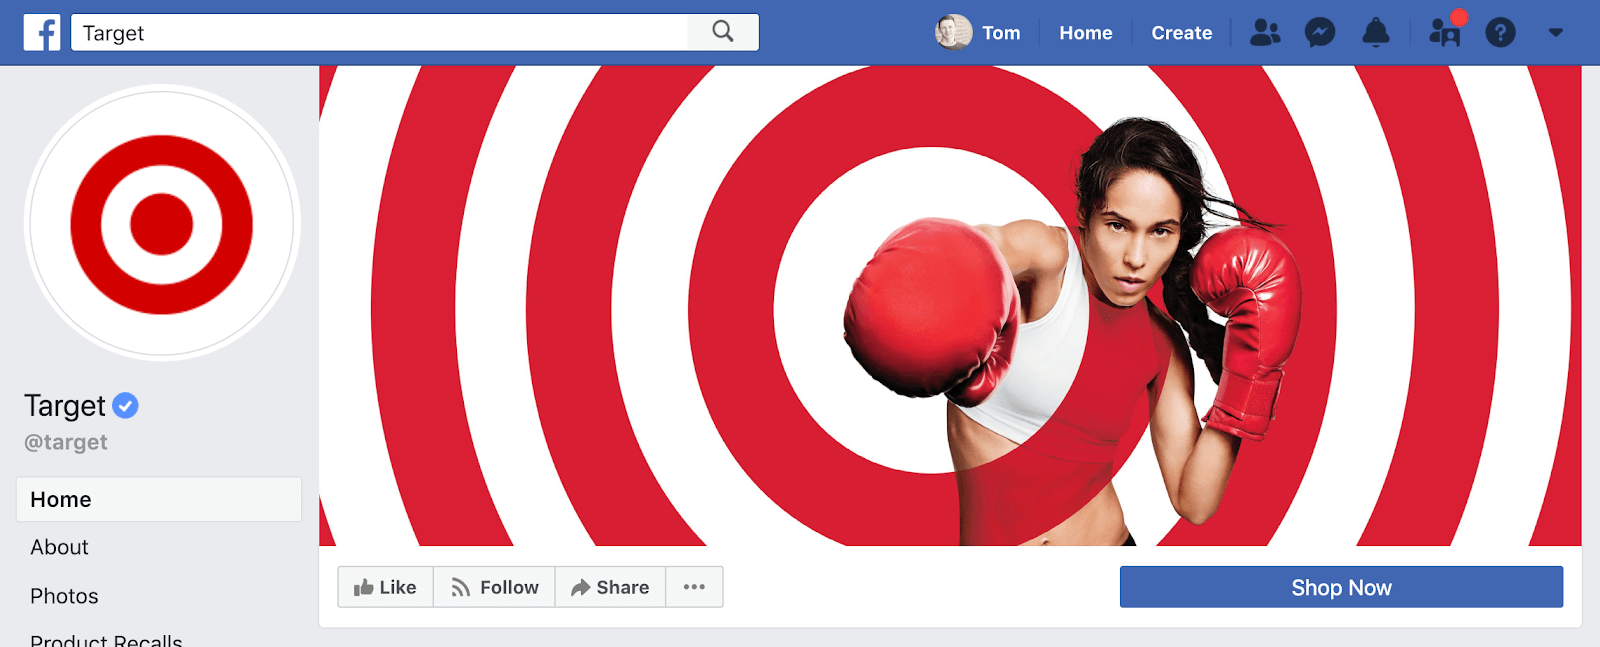 Target Facebook Page